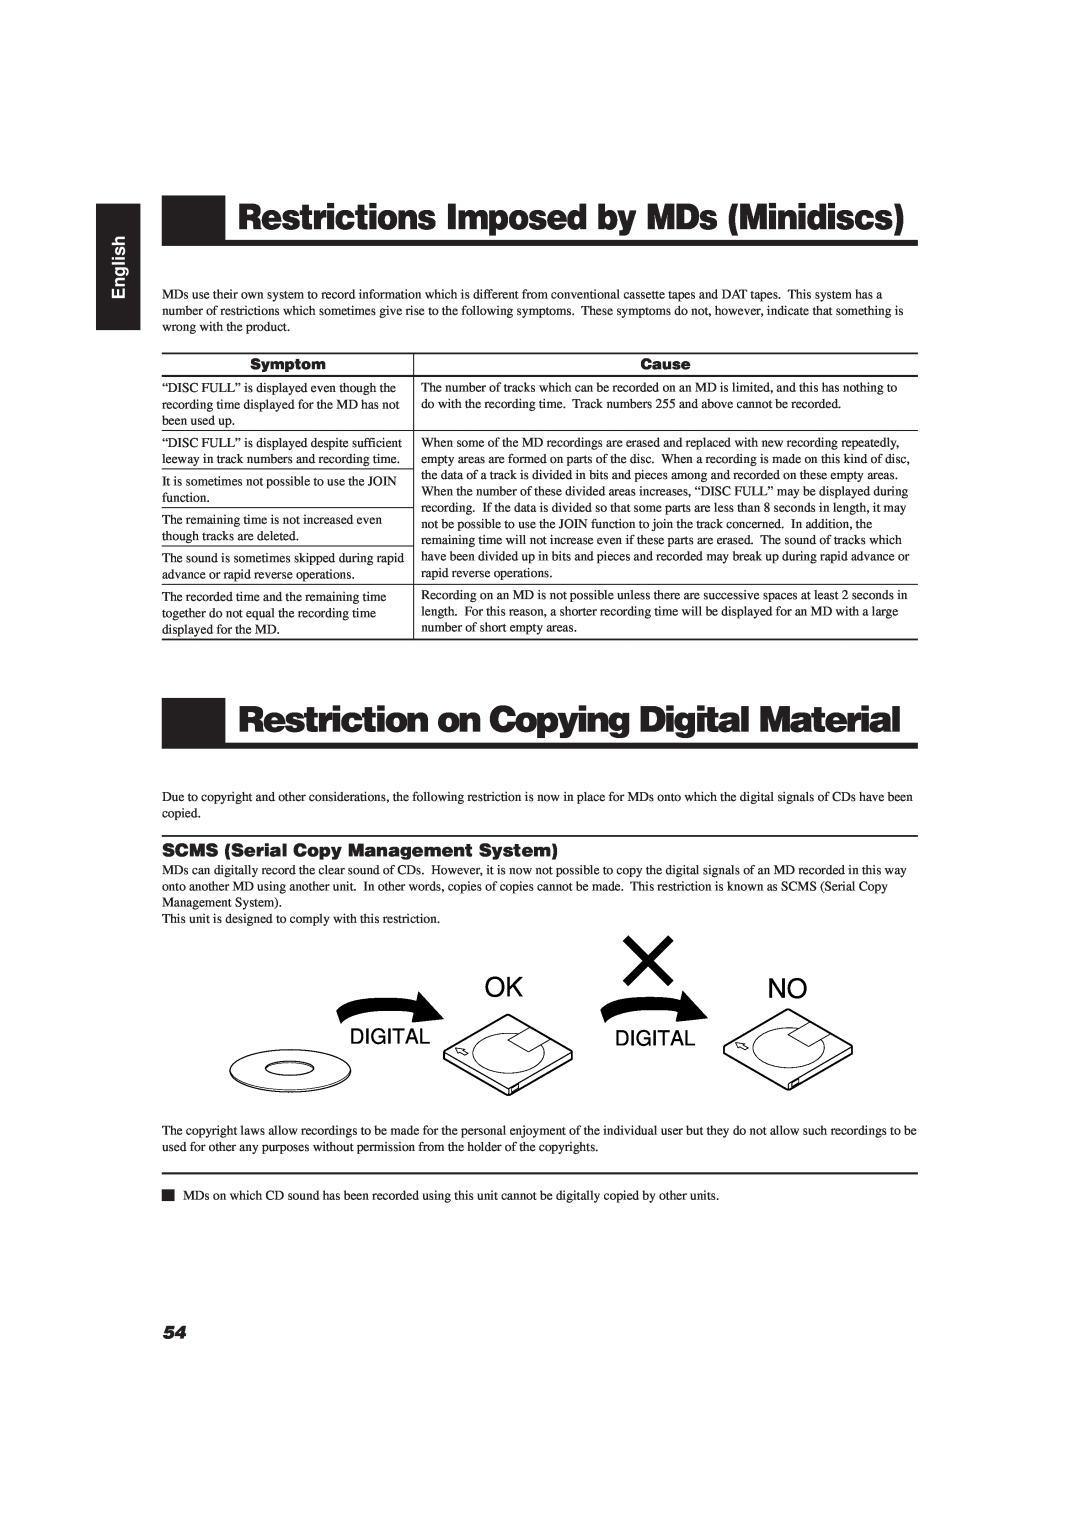 JVC XU-301BK Restrictions Imposed by MDs Minidiscs, Restriction on Copying Digital Material, Okno, Digitaldigital, English 